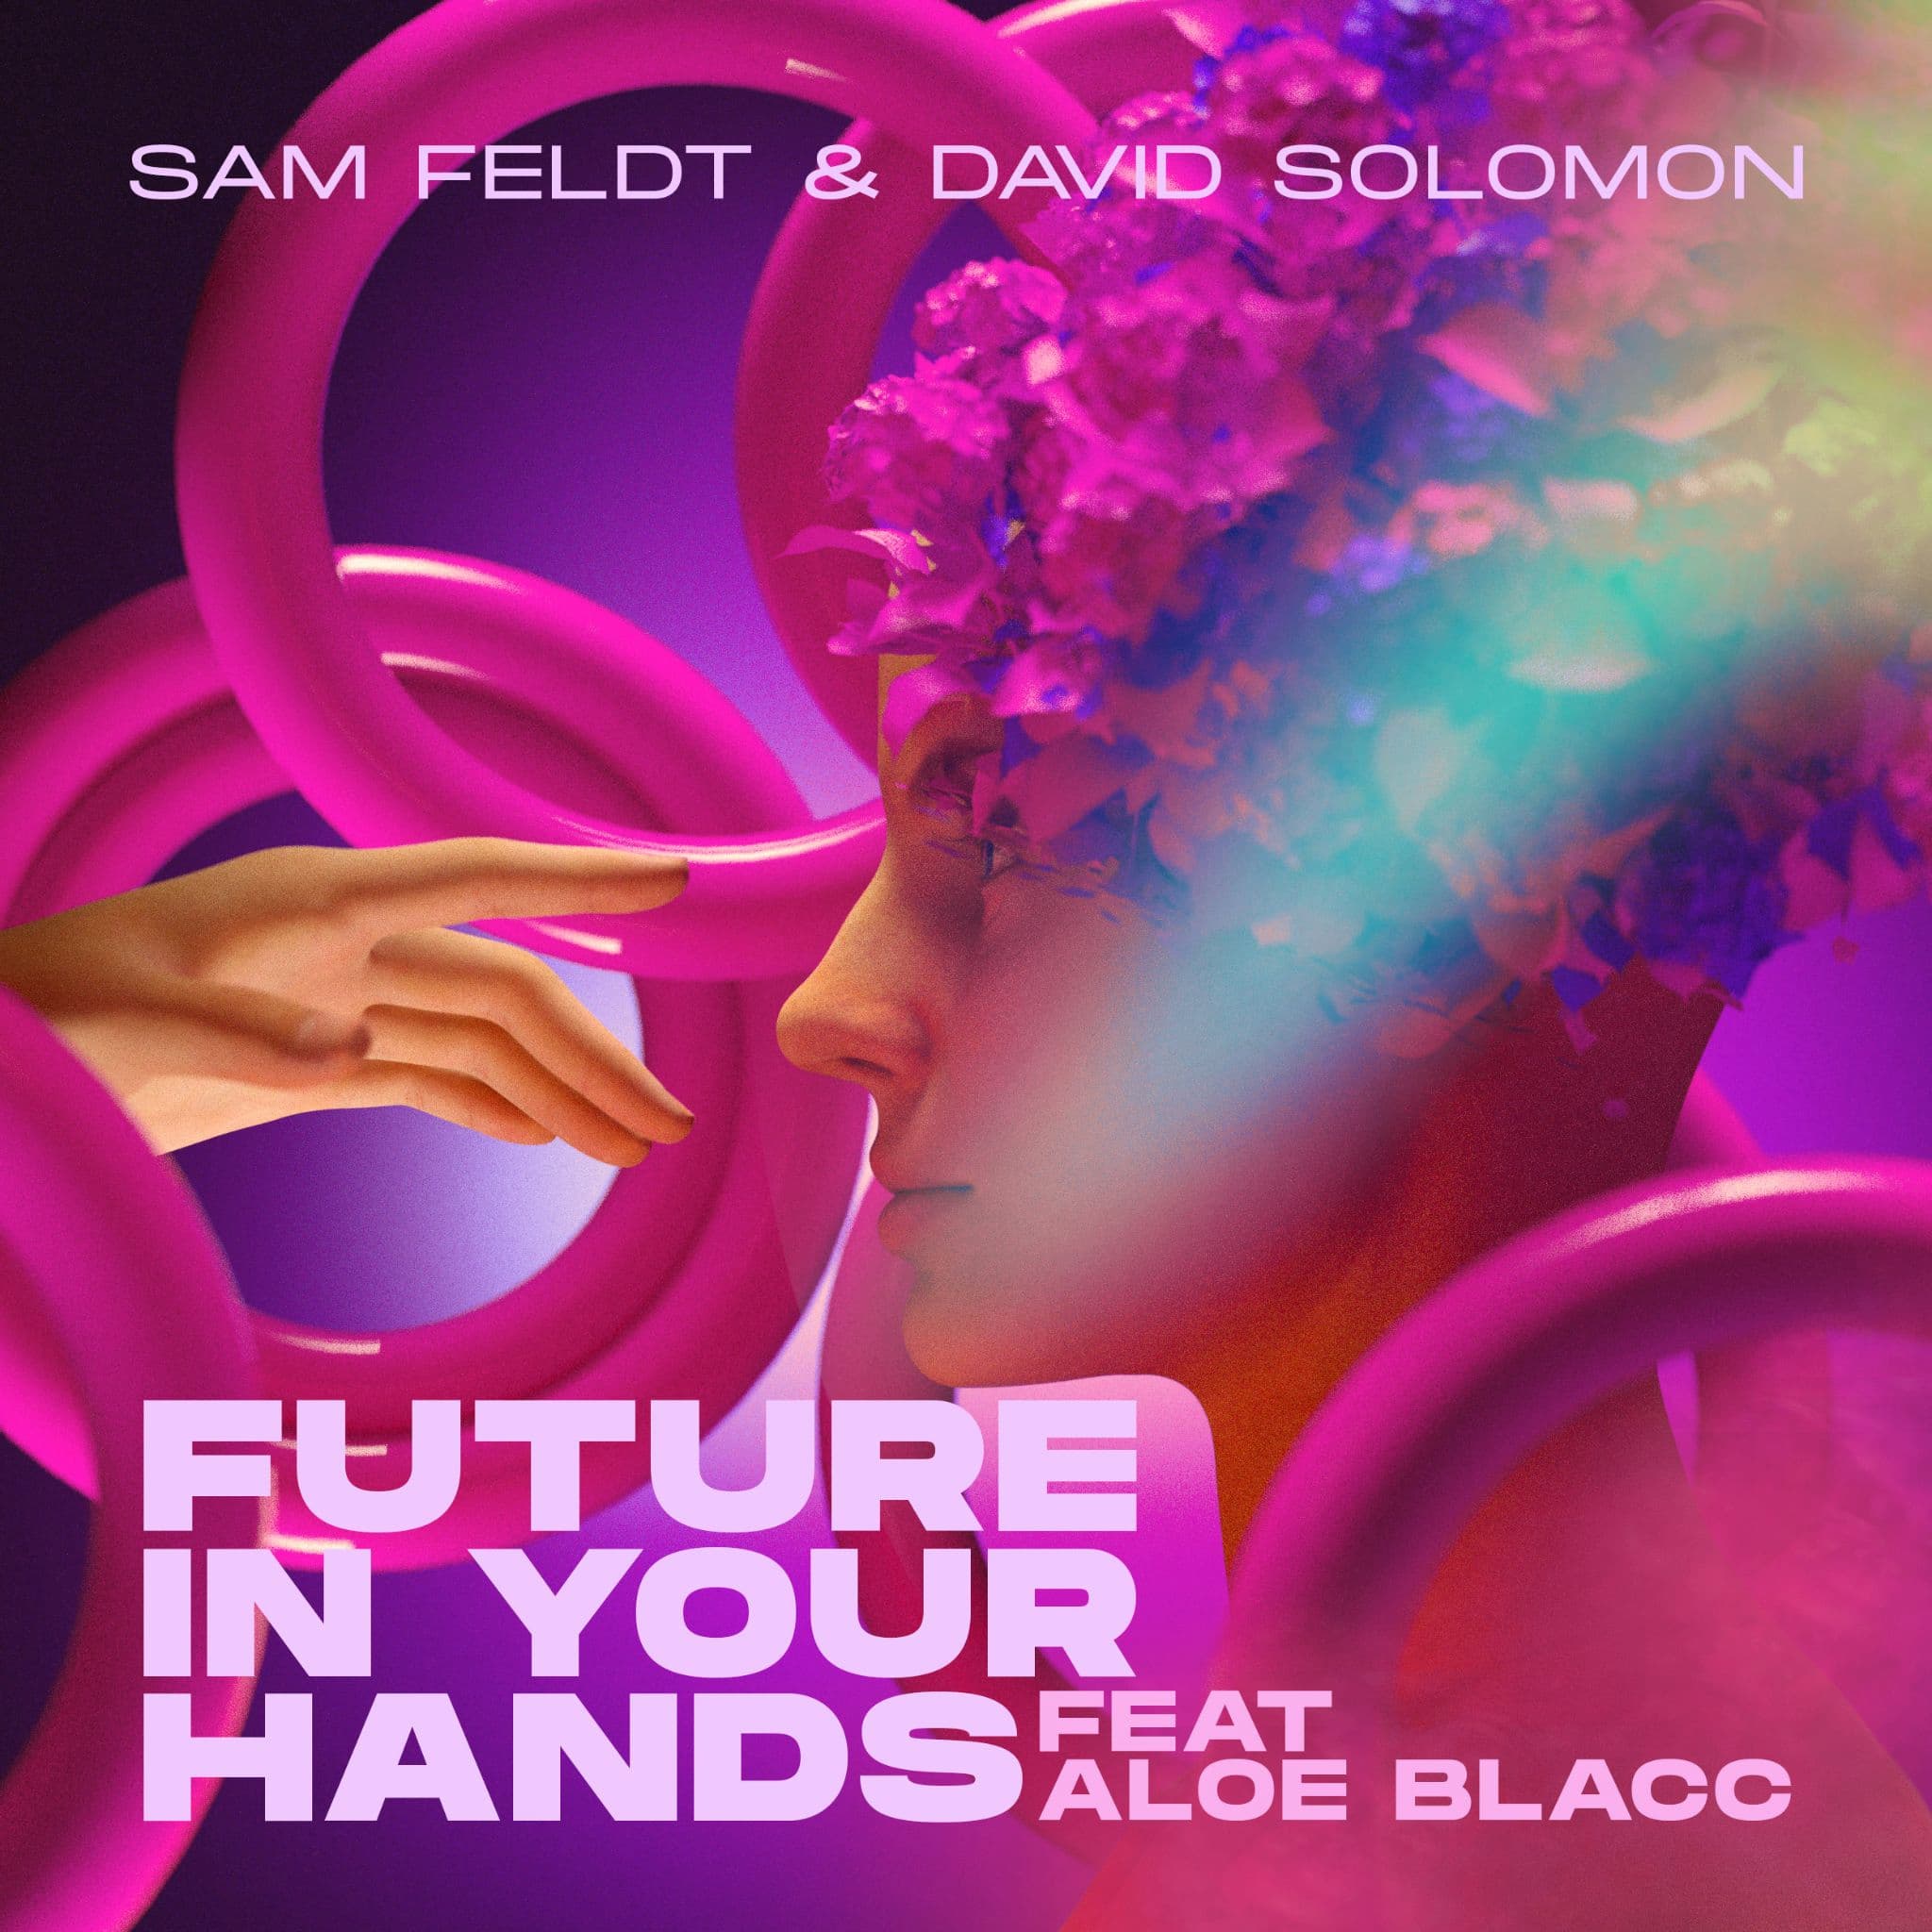 Sam Feldt, David Solomon e Aloe Blacc lançam "Future In Your Hands"